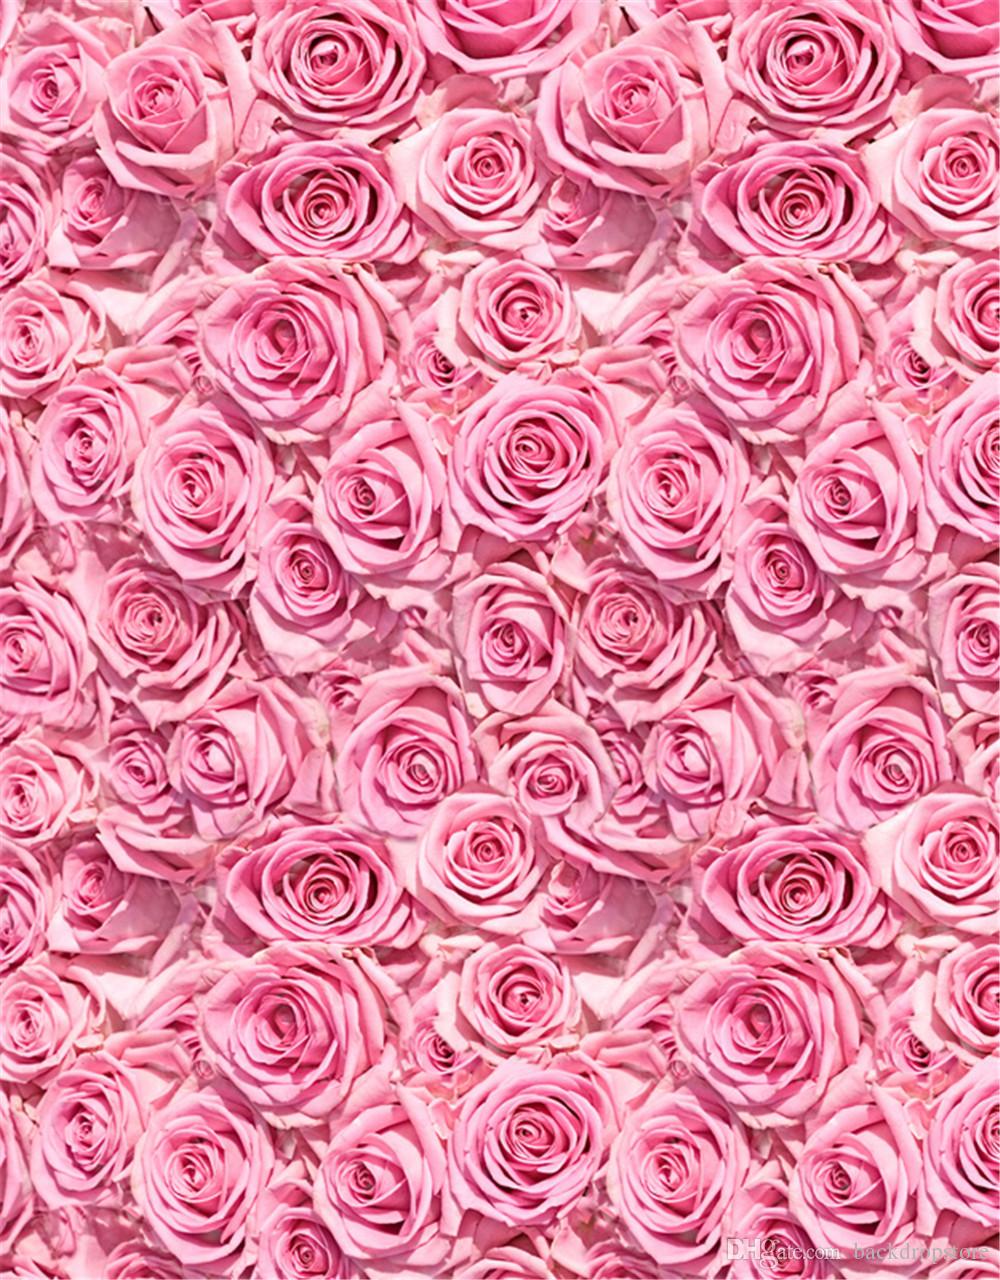  Digital Printed Pink Rose 3D Backgrounds Baby Newborn